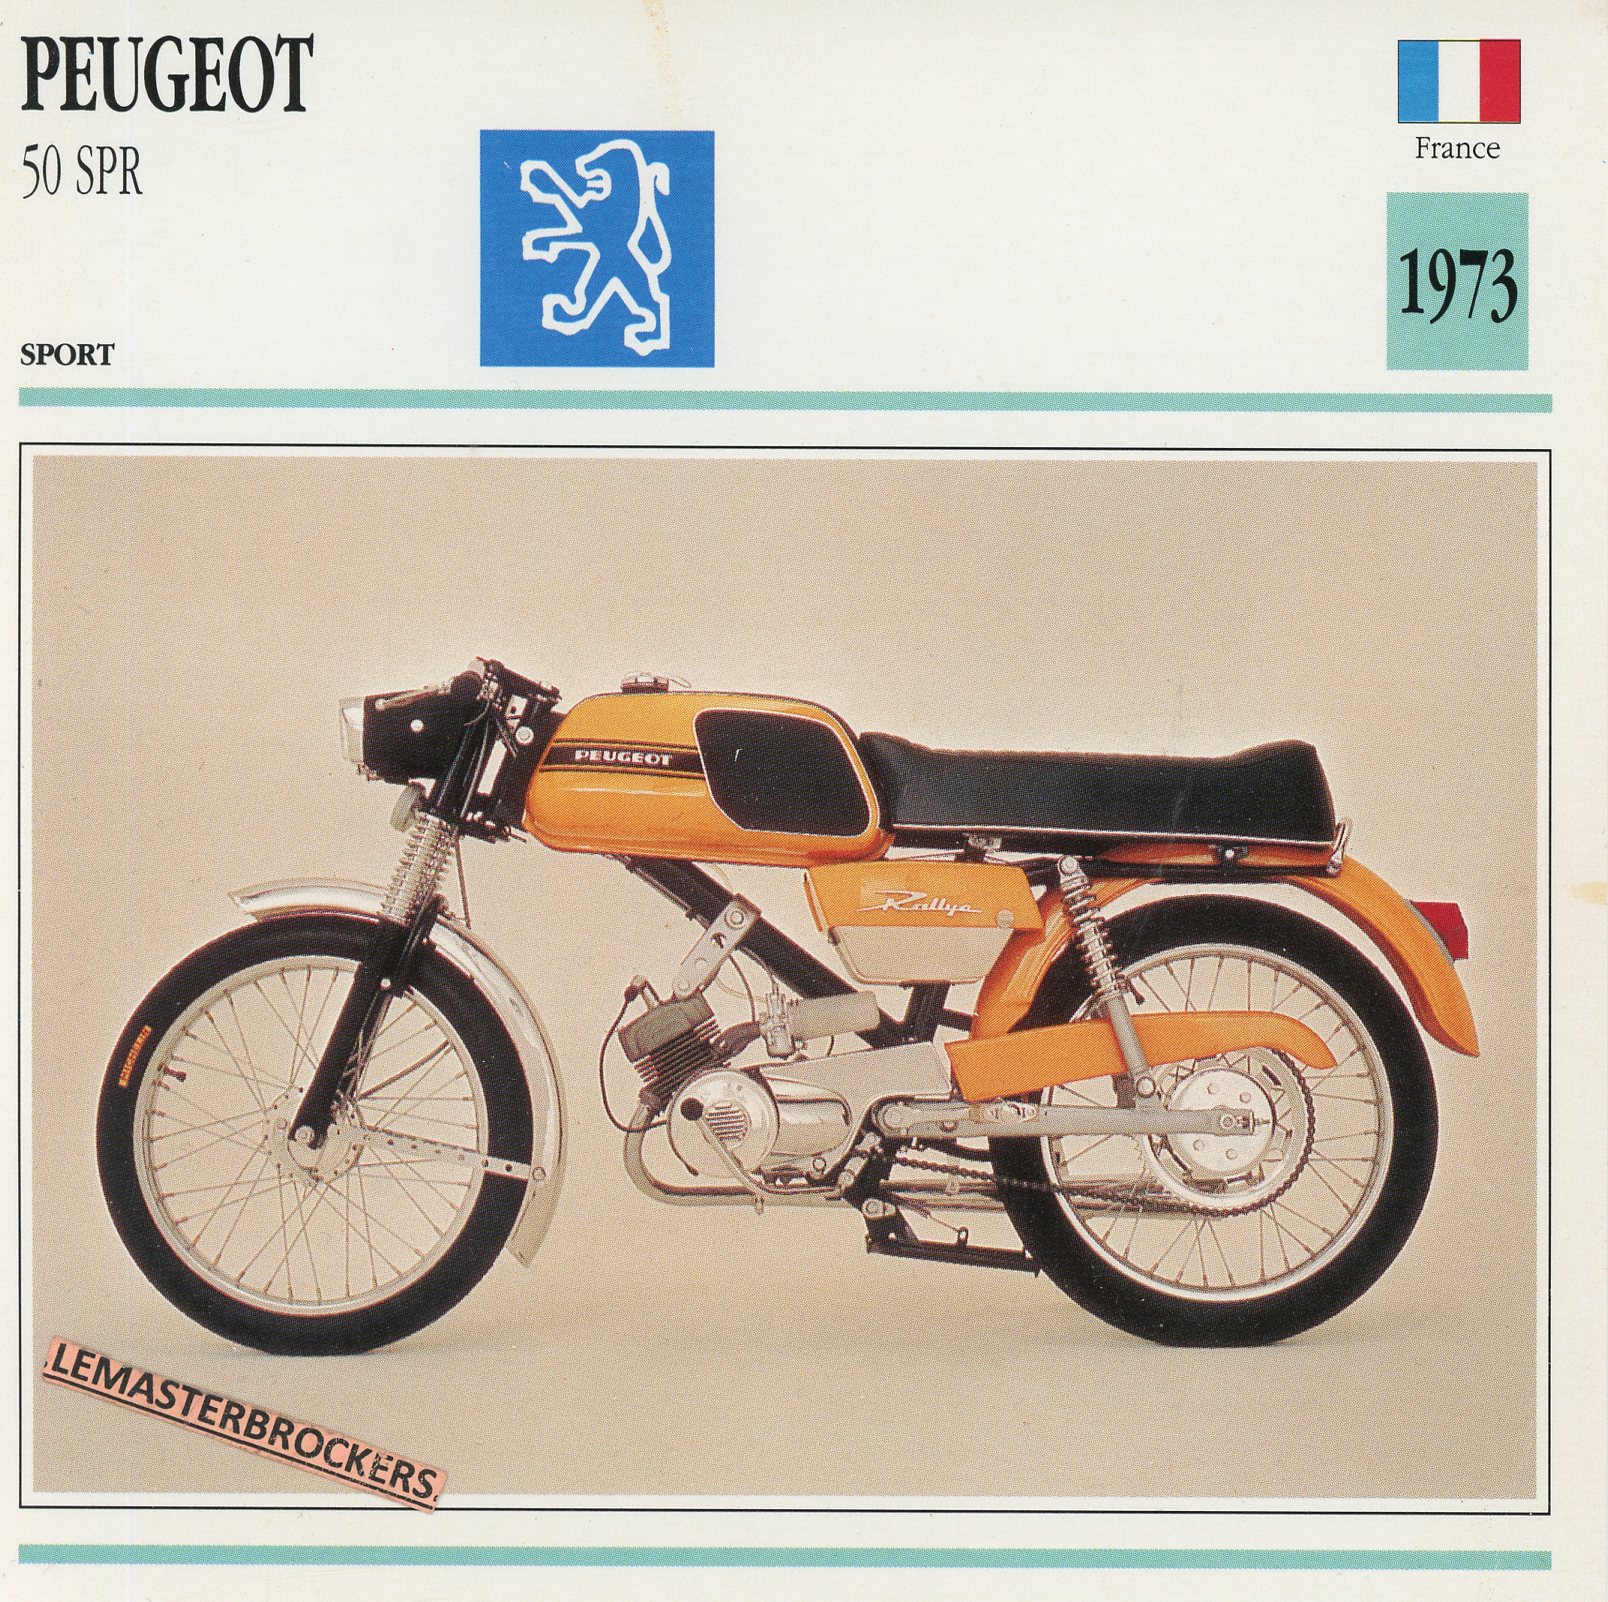 PEUGEOT-50-SPR-1973-FICHE-MOTO-CYCLOMOTEUR-LEMASTERBROCKERS